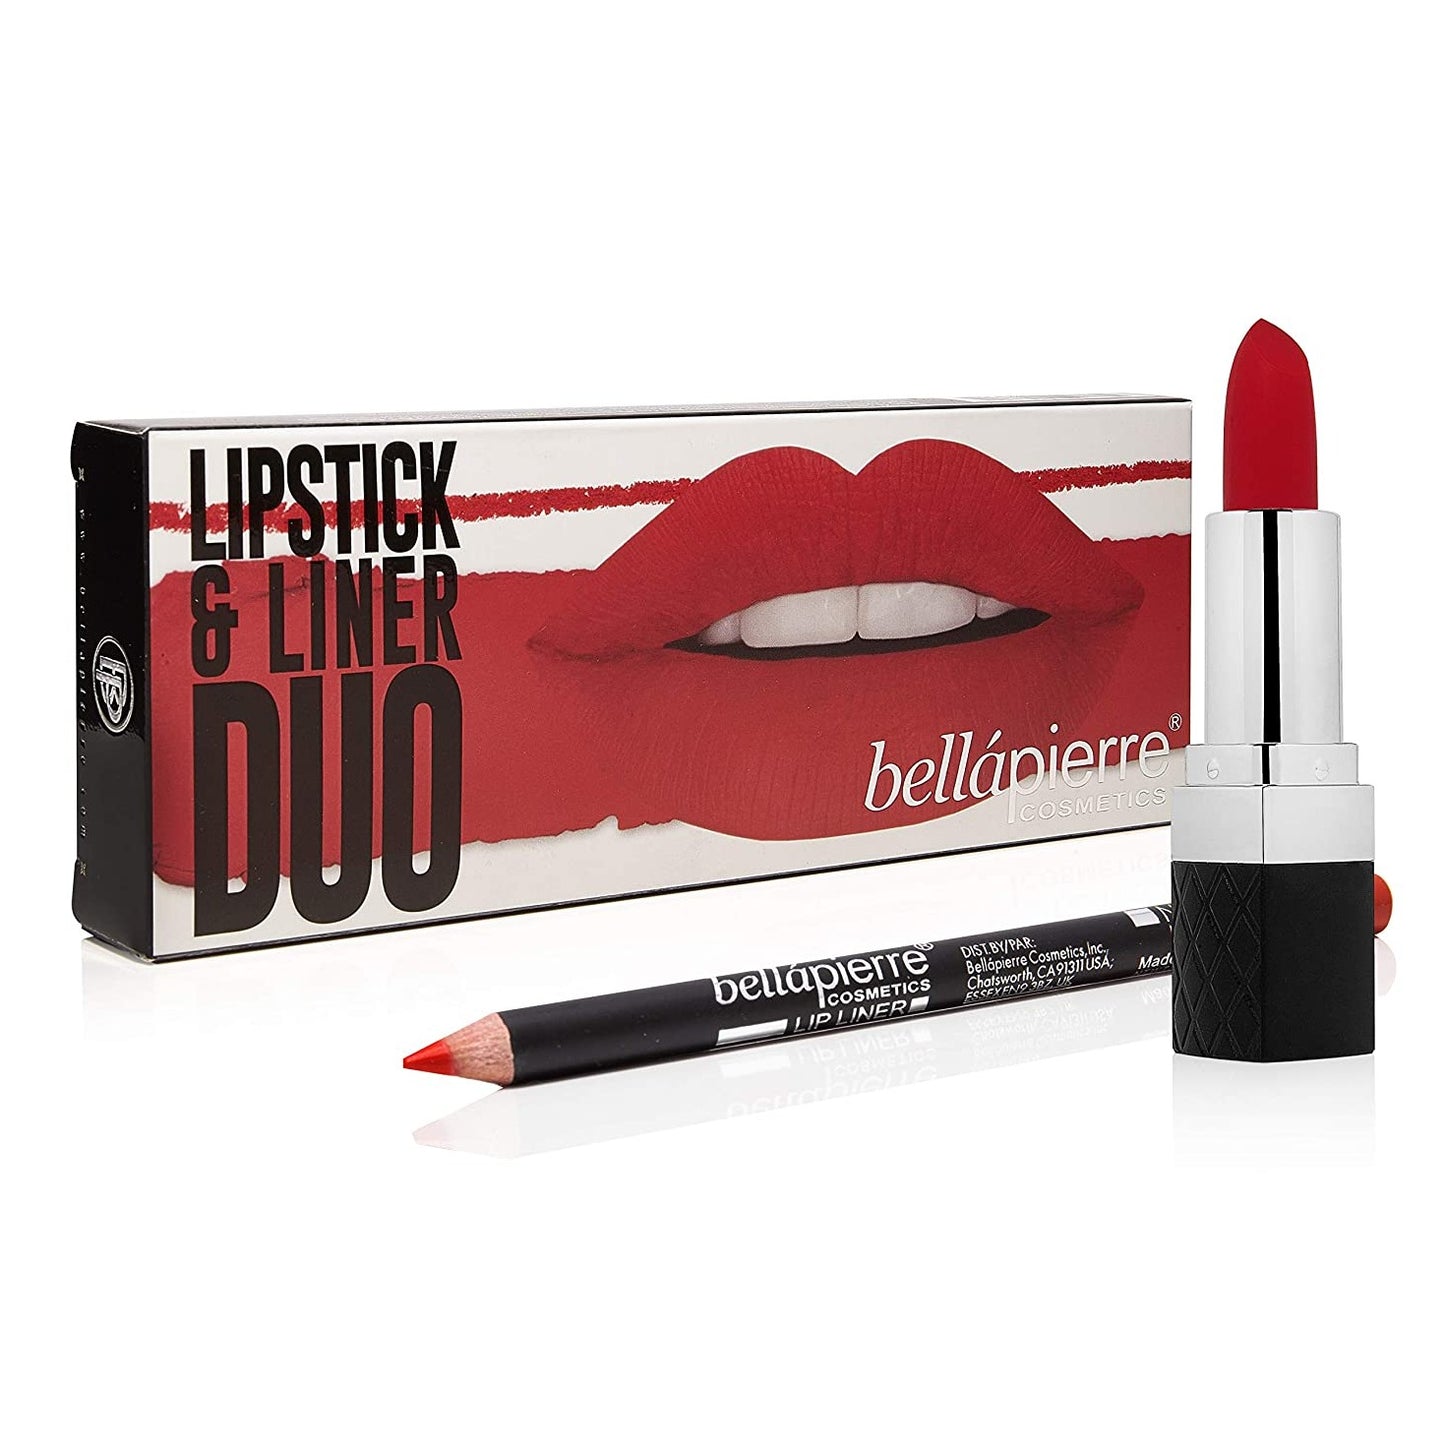 Bellapierre 100% VEGAN & CRUELTY FREE lipstick & lip liner duo in the color fire red